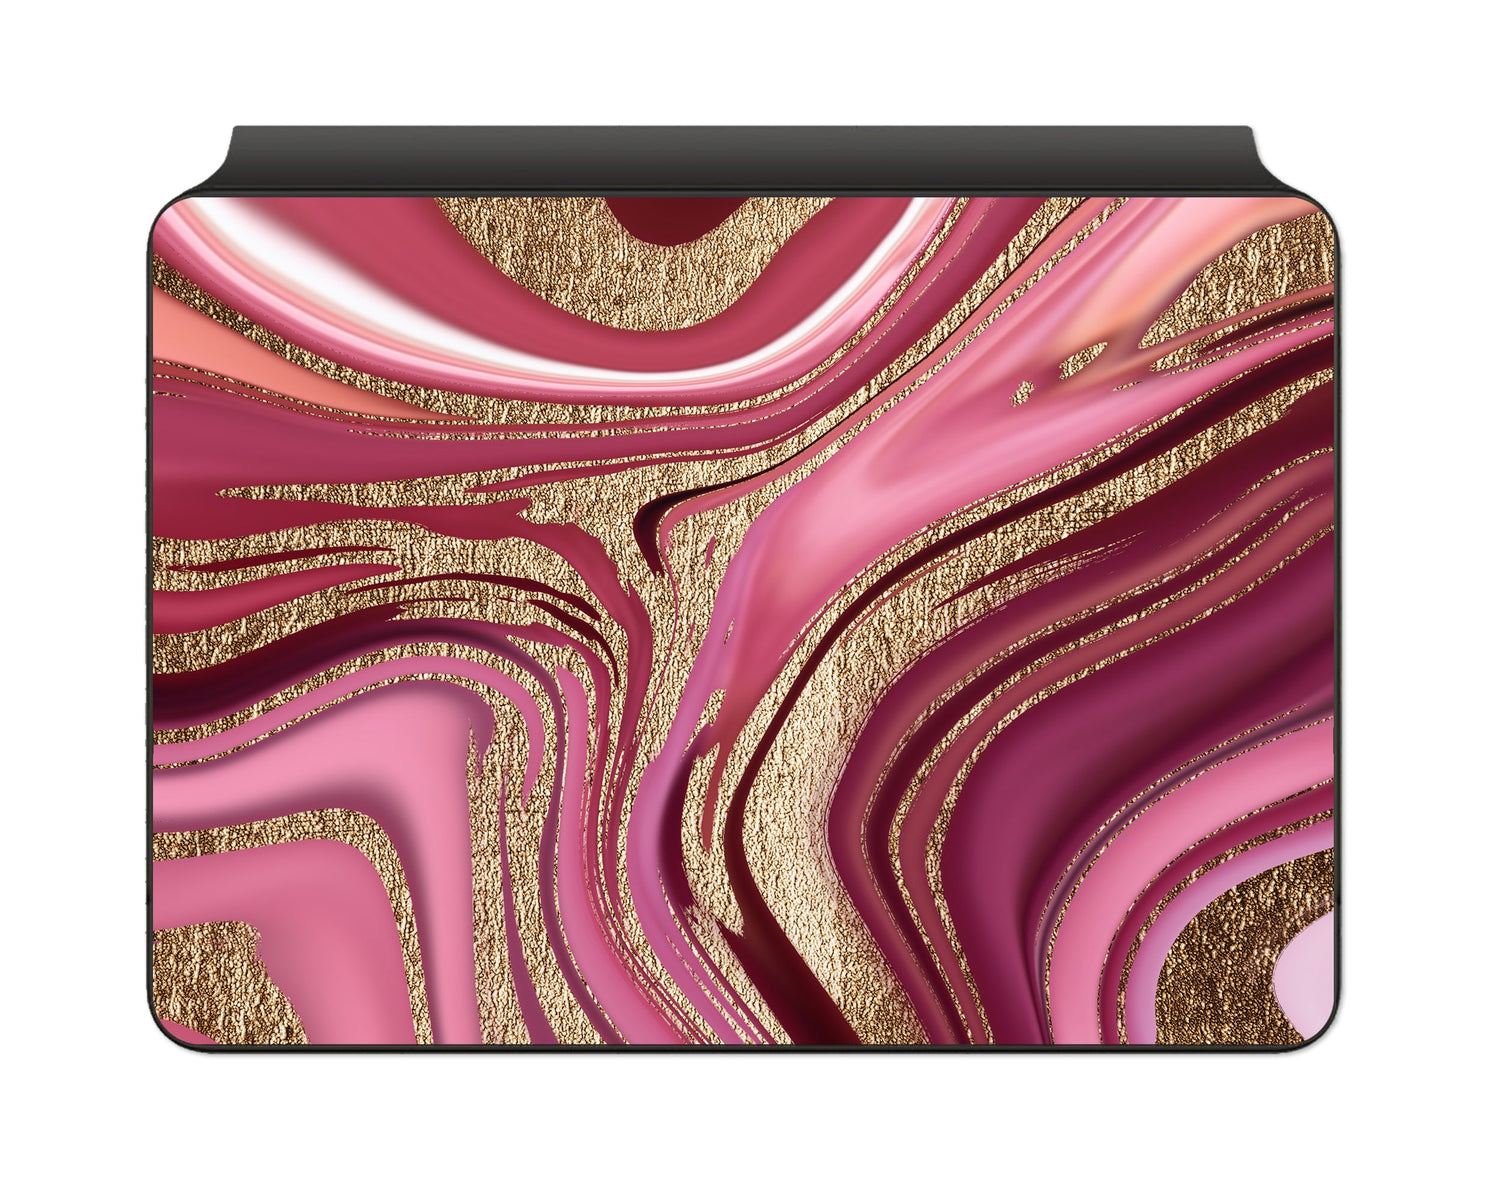 Lux Skins Magic Keyboard Ethereal Pink Gold Marble iPad Air Skins - Pattern Marble Skin